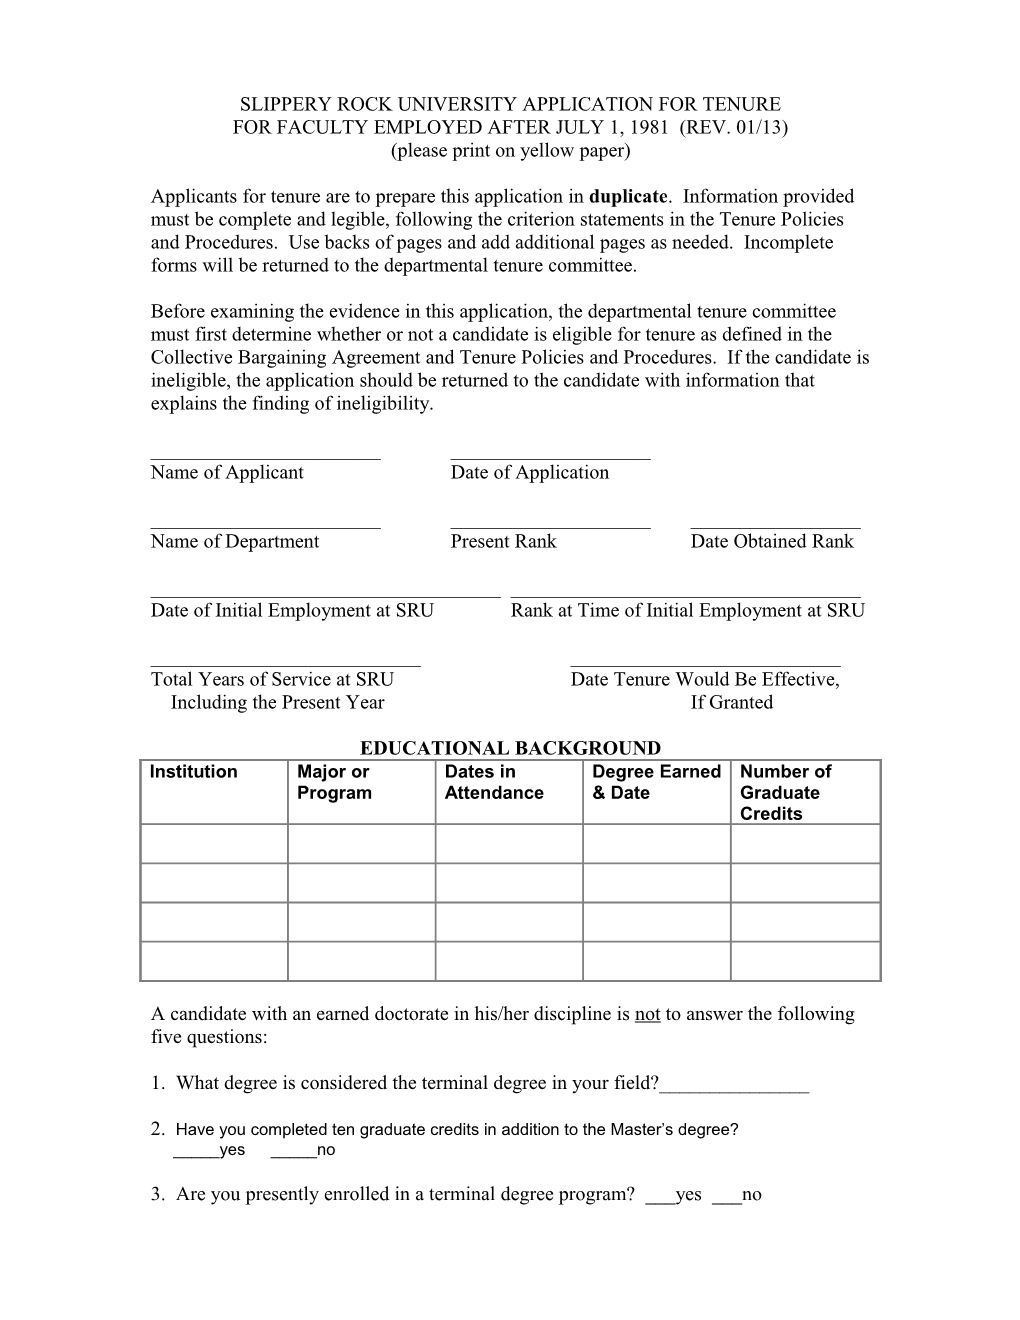 Slippery Rock University Application for Tenure